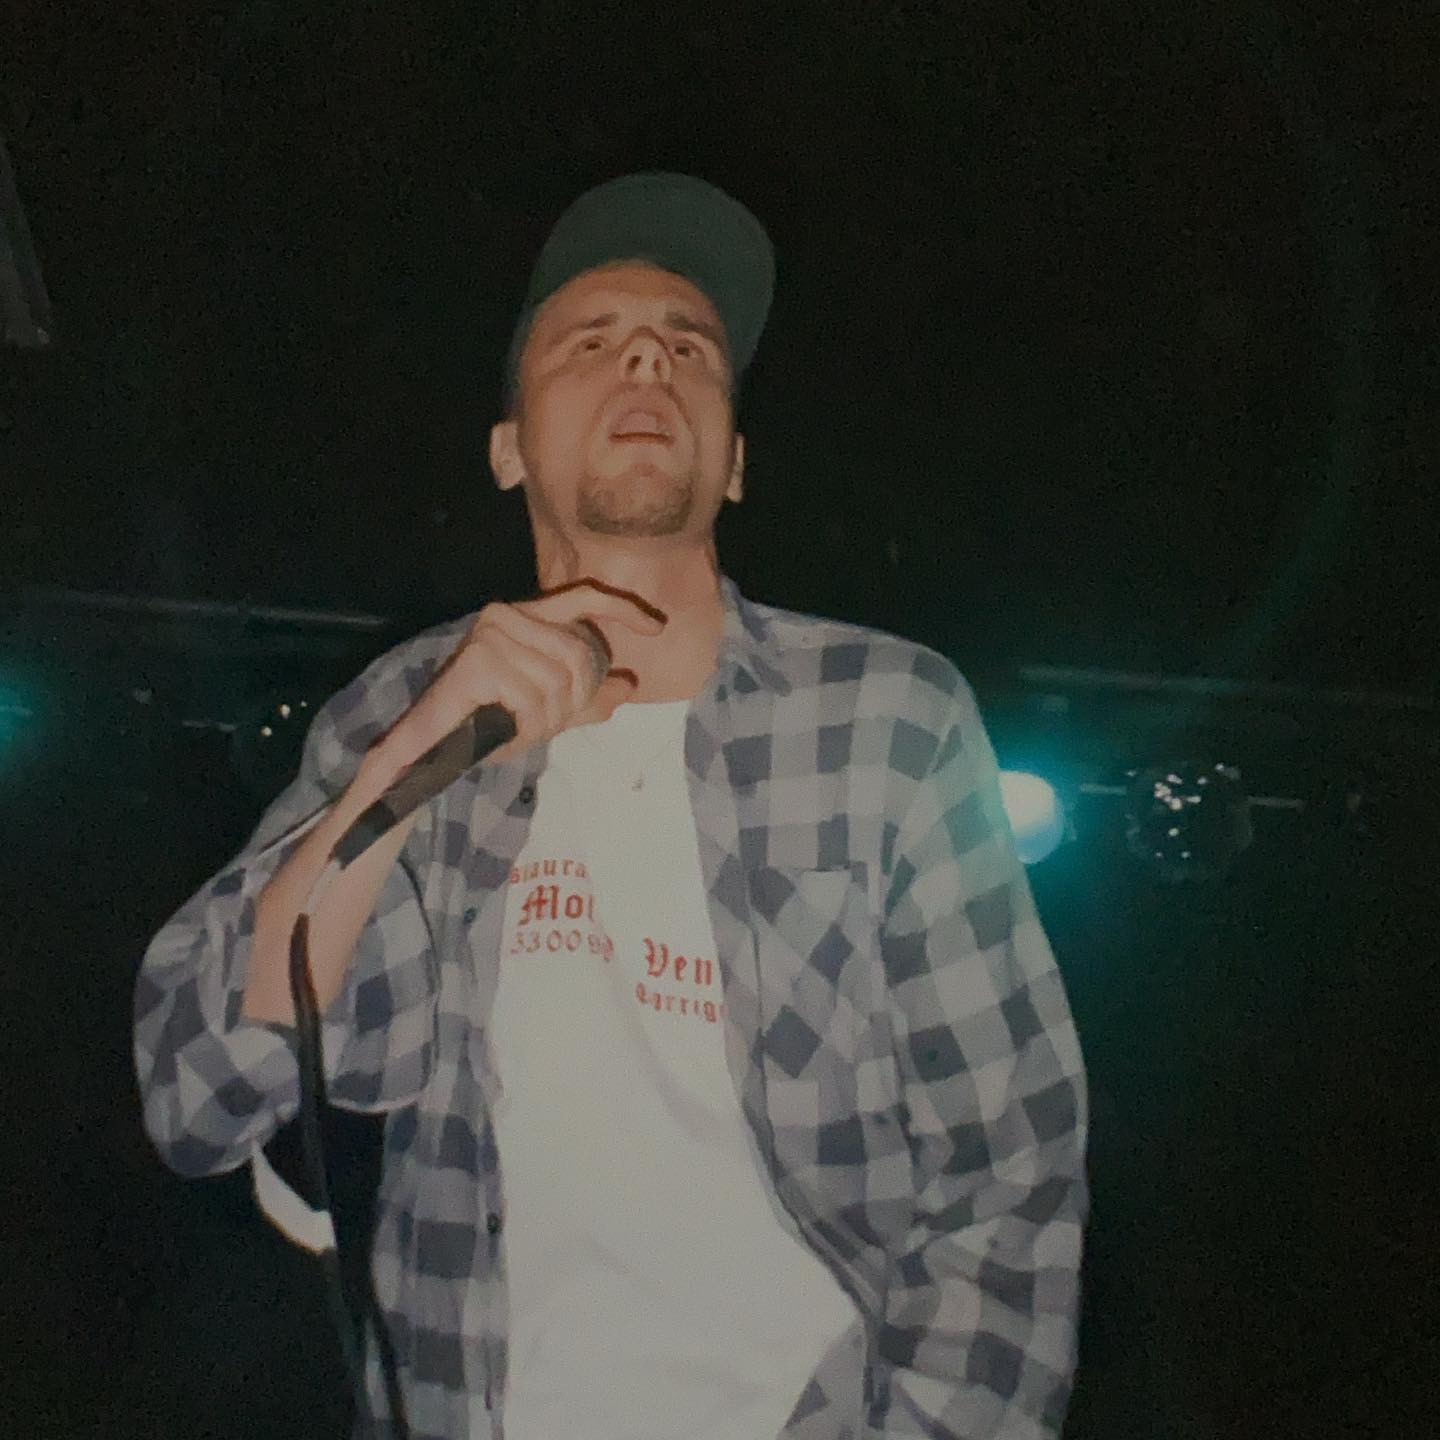 Osdorp Posse - Struik Heino - 2 March 1996 #hiphop @osdorpposseshop 📸 by @twentylandcrew